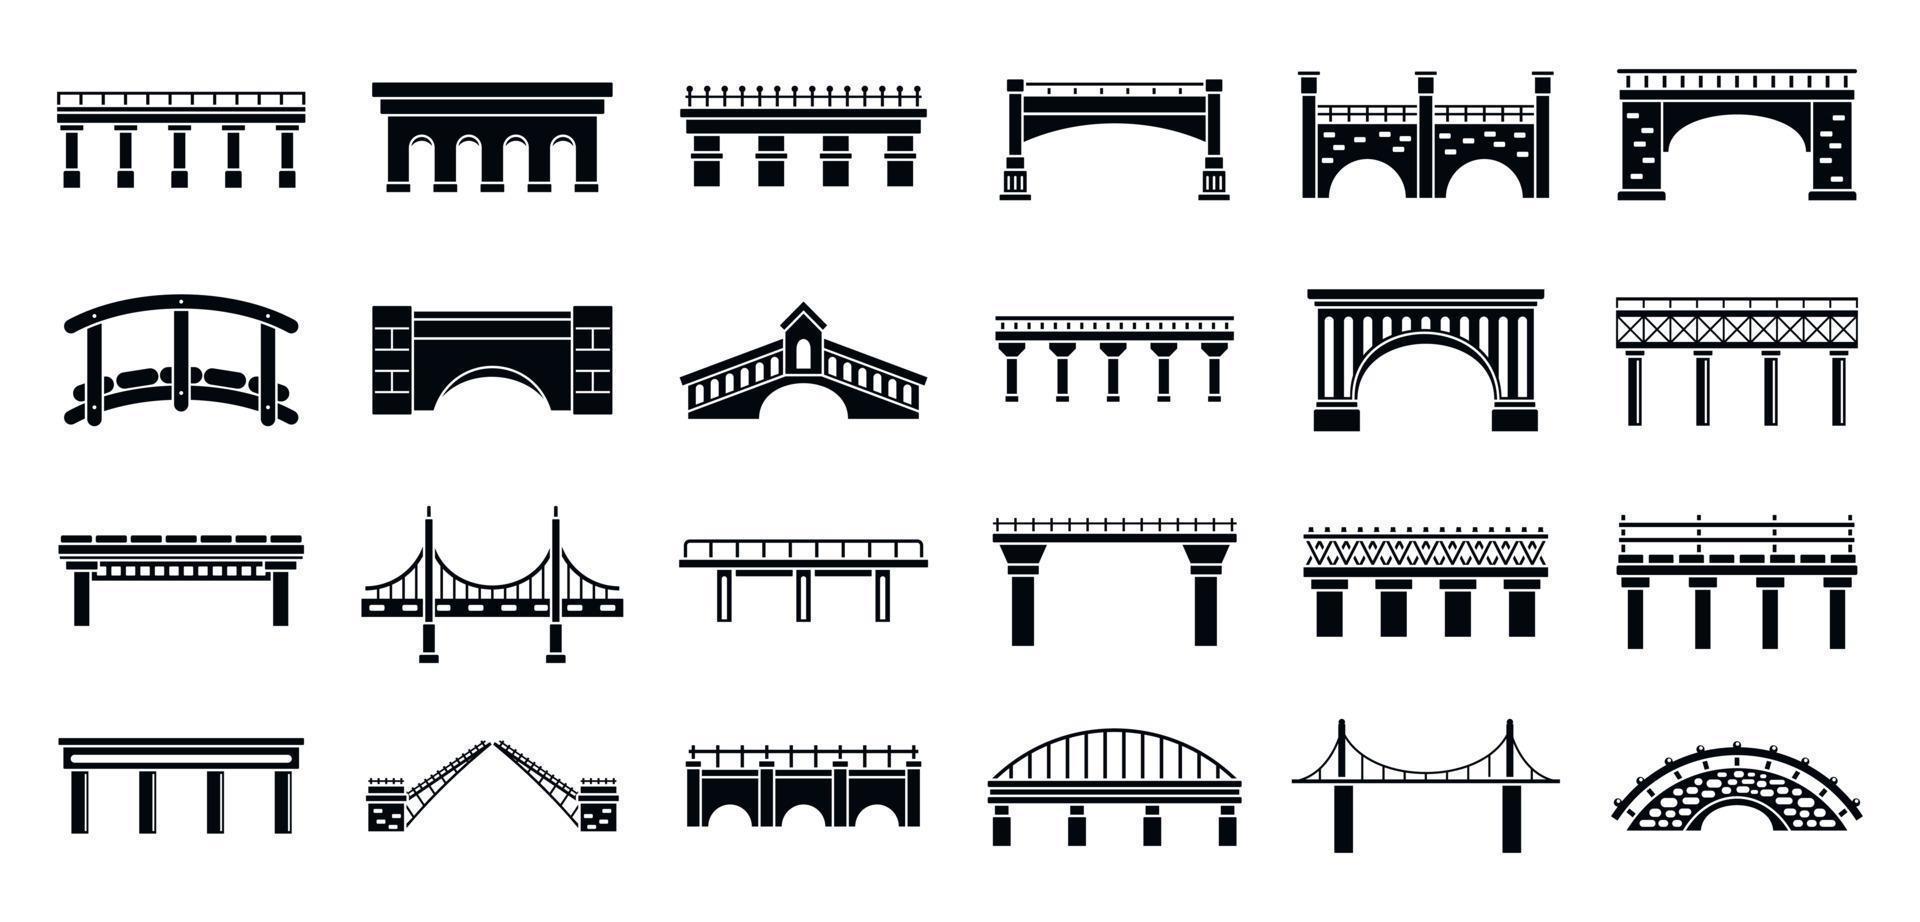 Road bridges icons set, simple style vector